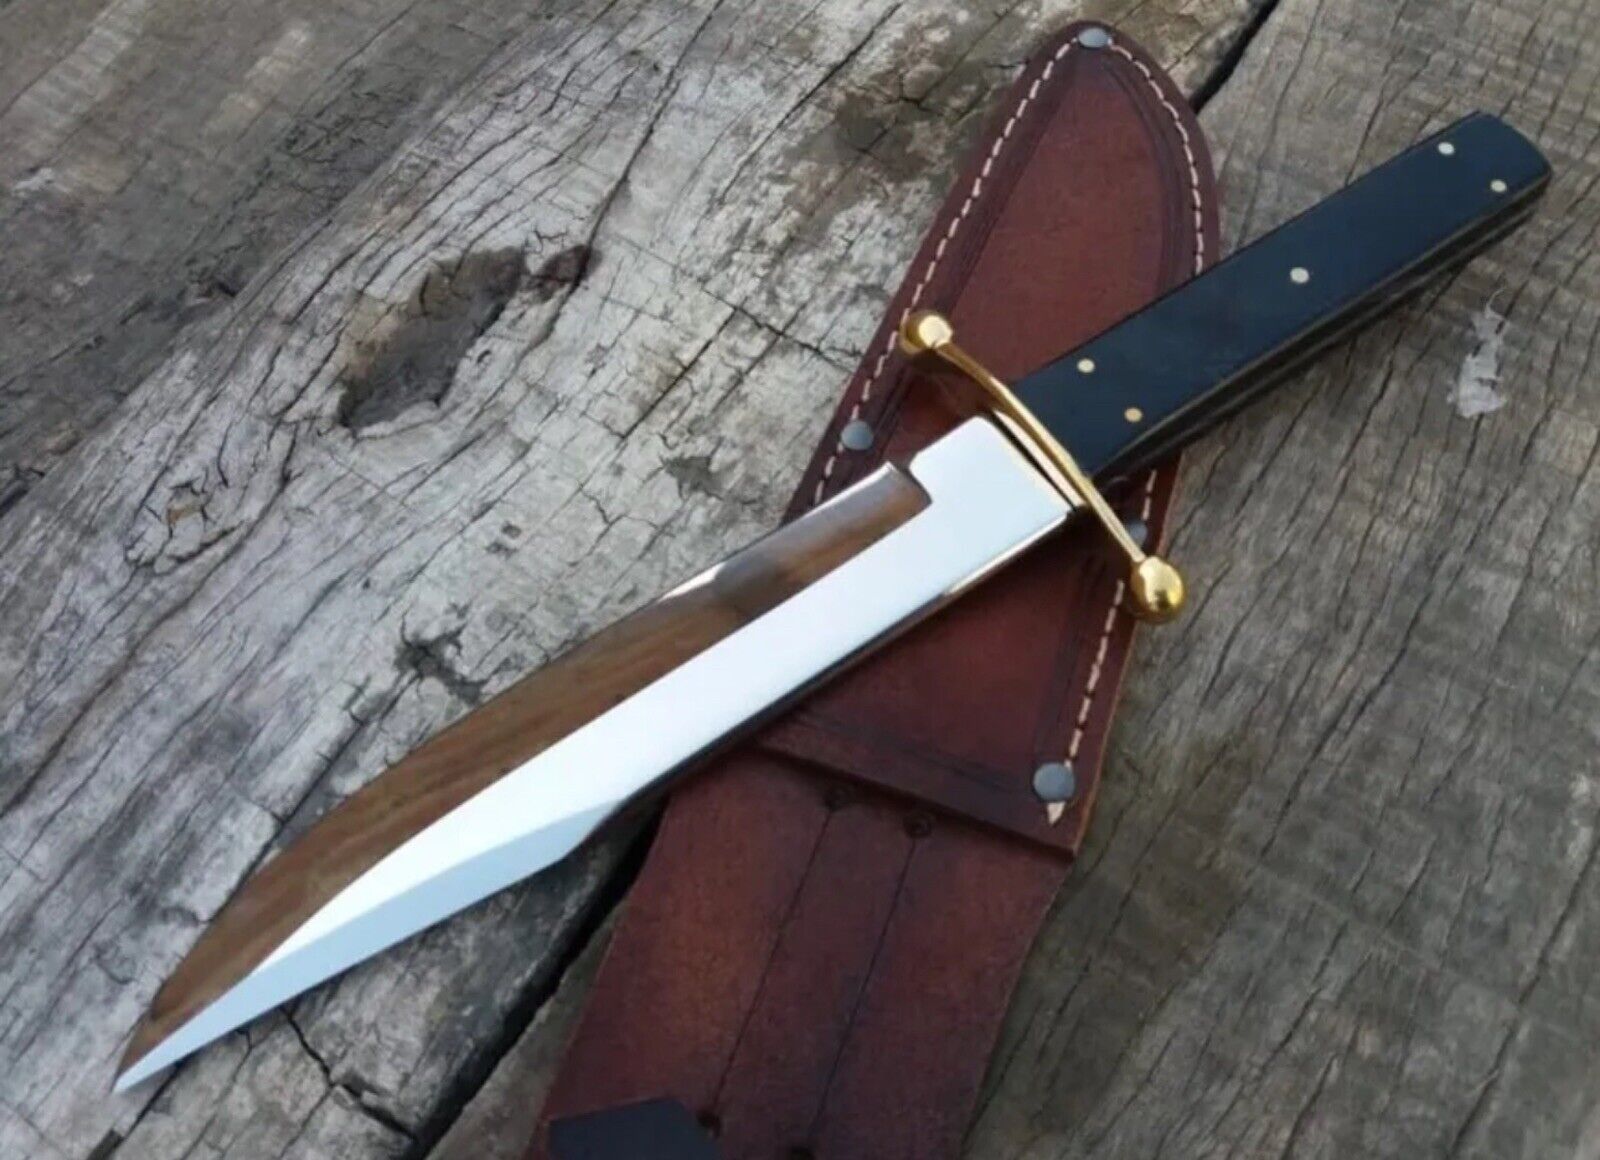 HIGH POLISHED MIRROR POLISH BOWIE KNIFE COFFIN SHAPE MICARTA HANDLE BOWIE KNIFE